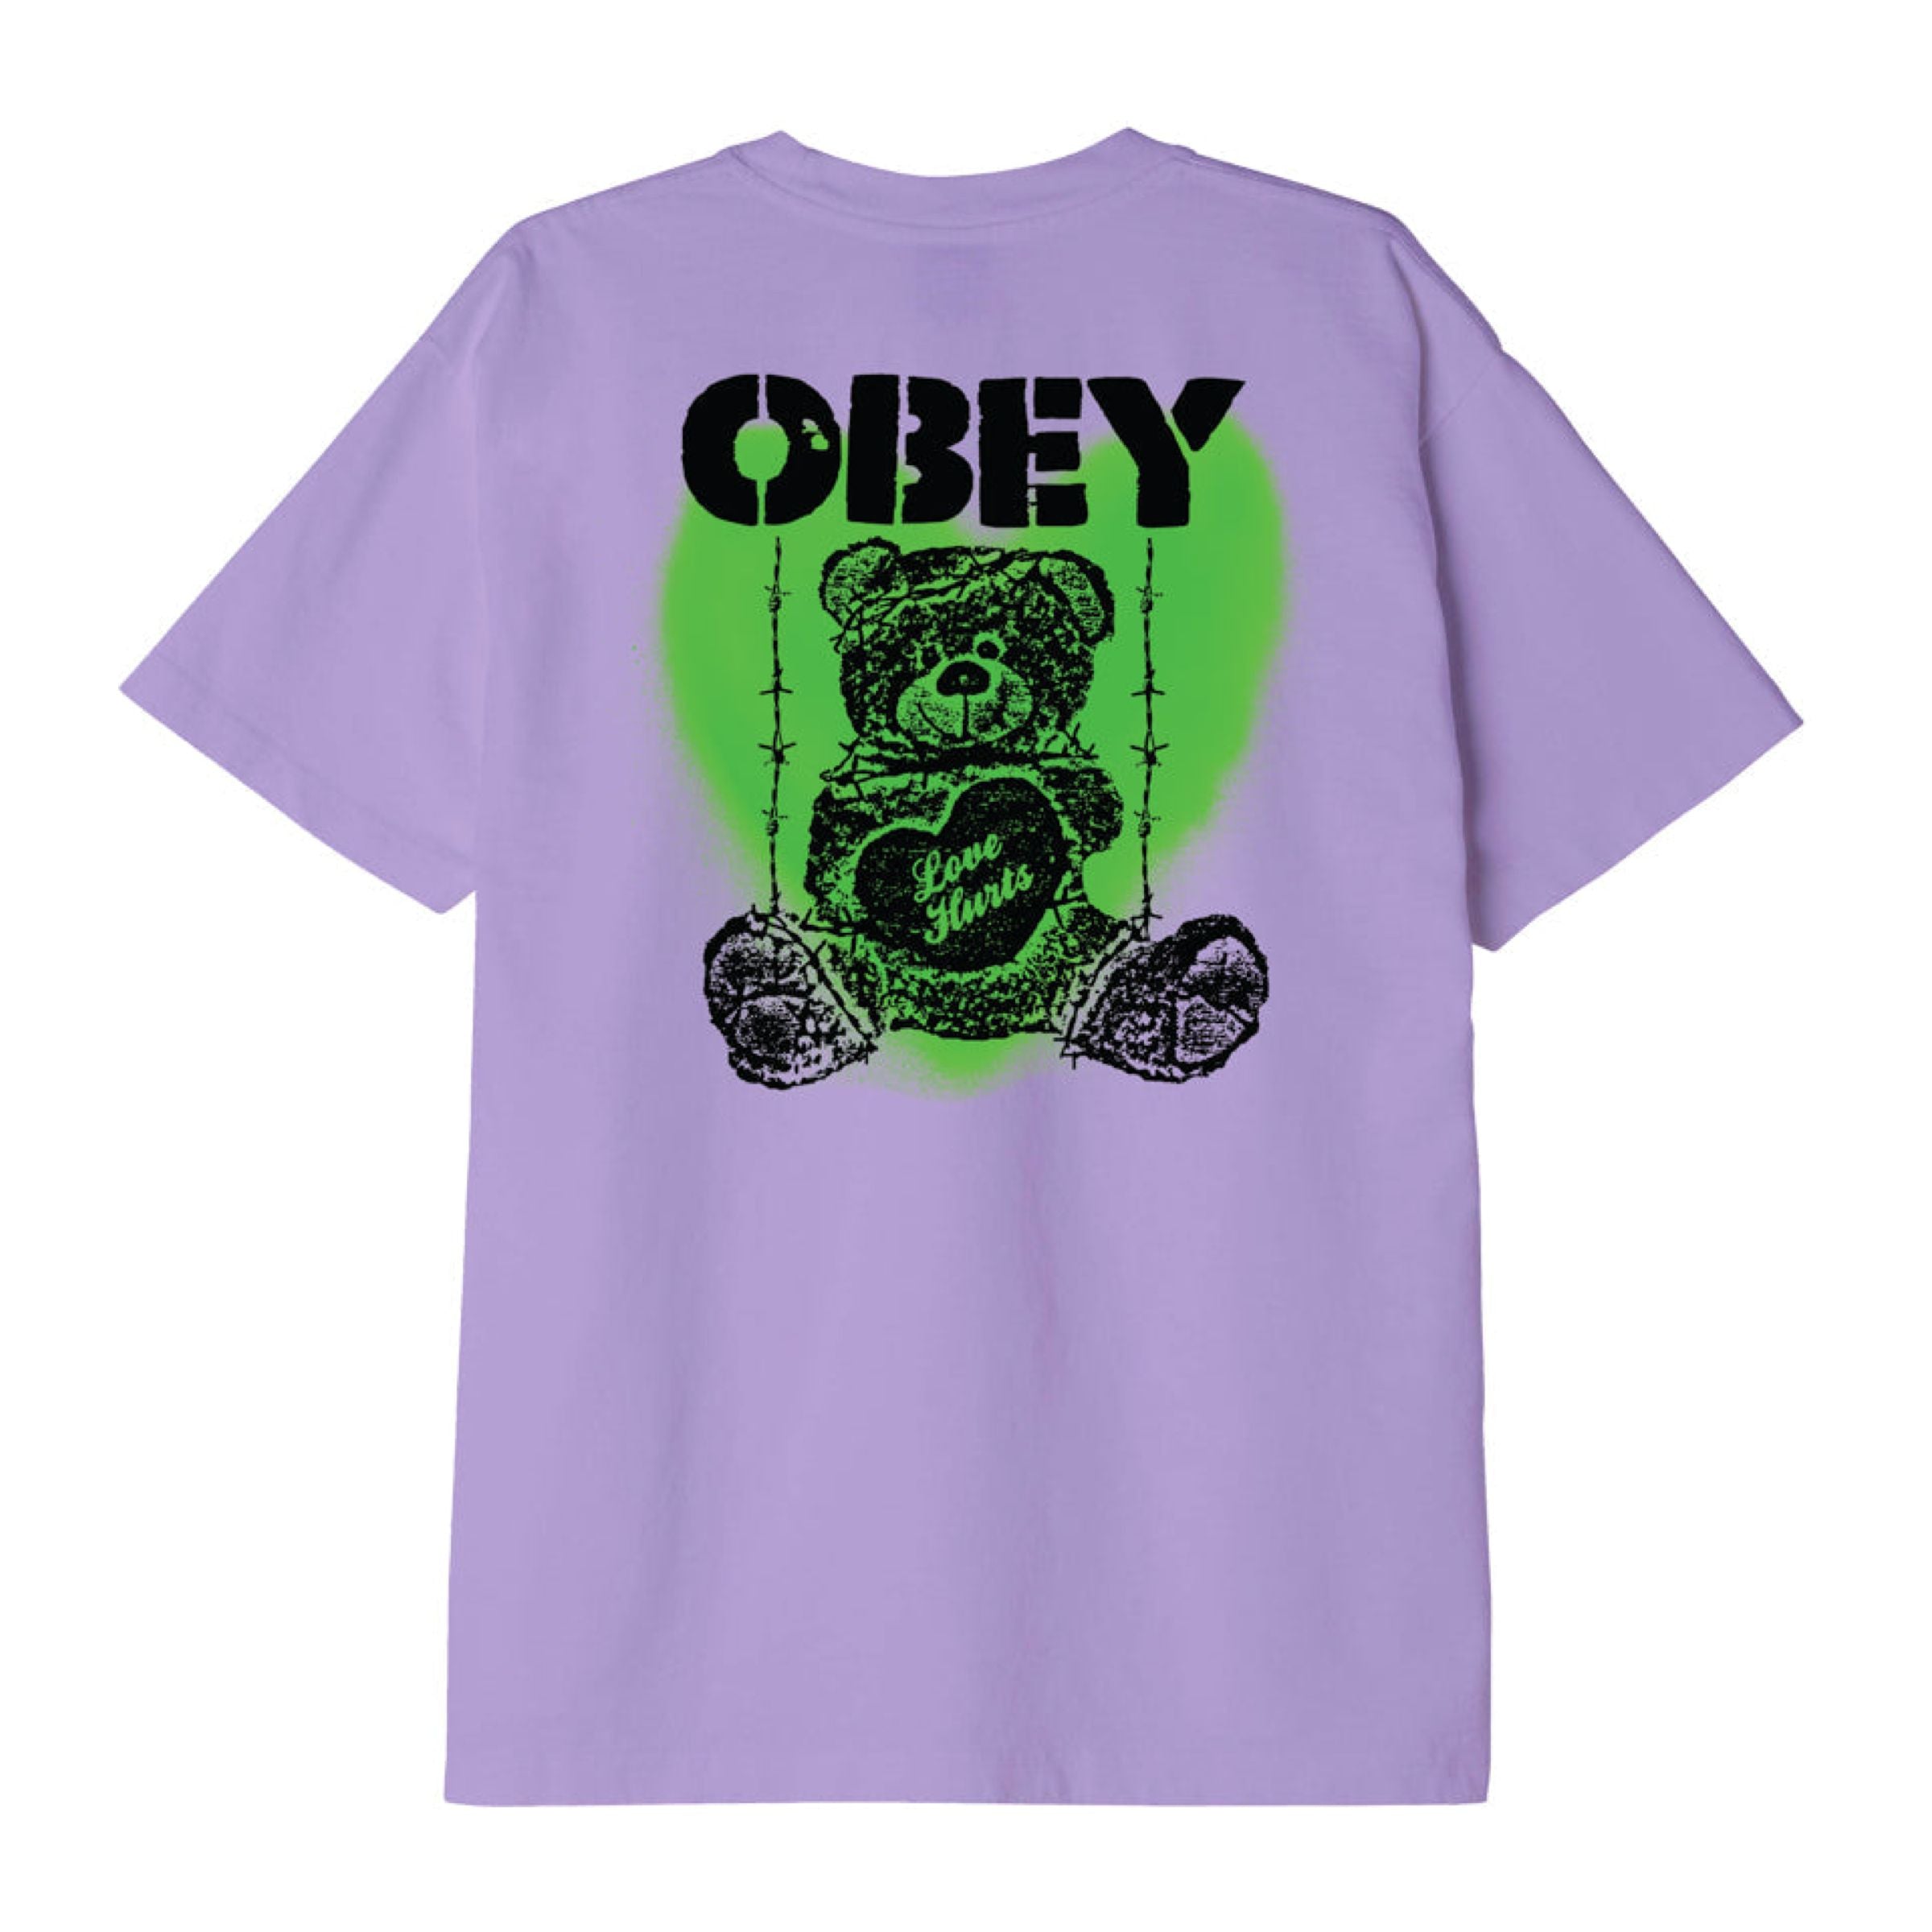 Obey Love hurts T-Shirt - Digital Lavender